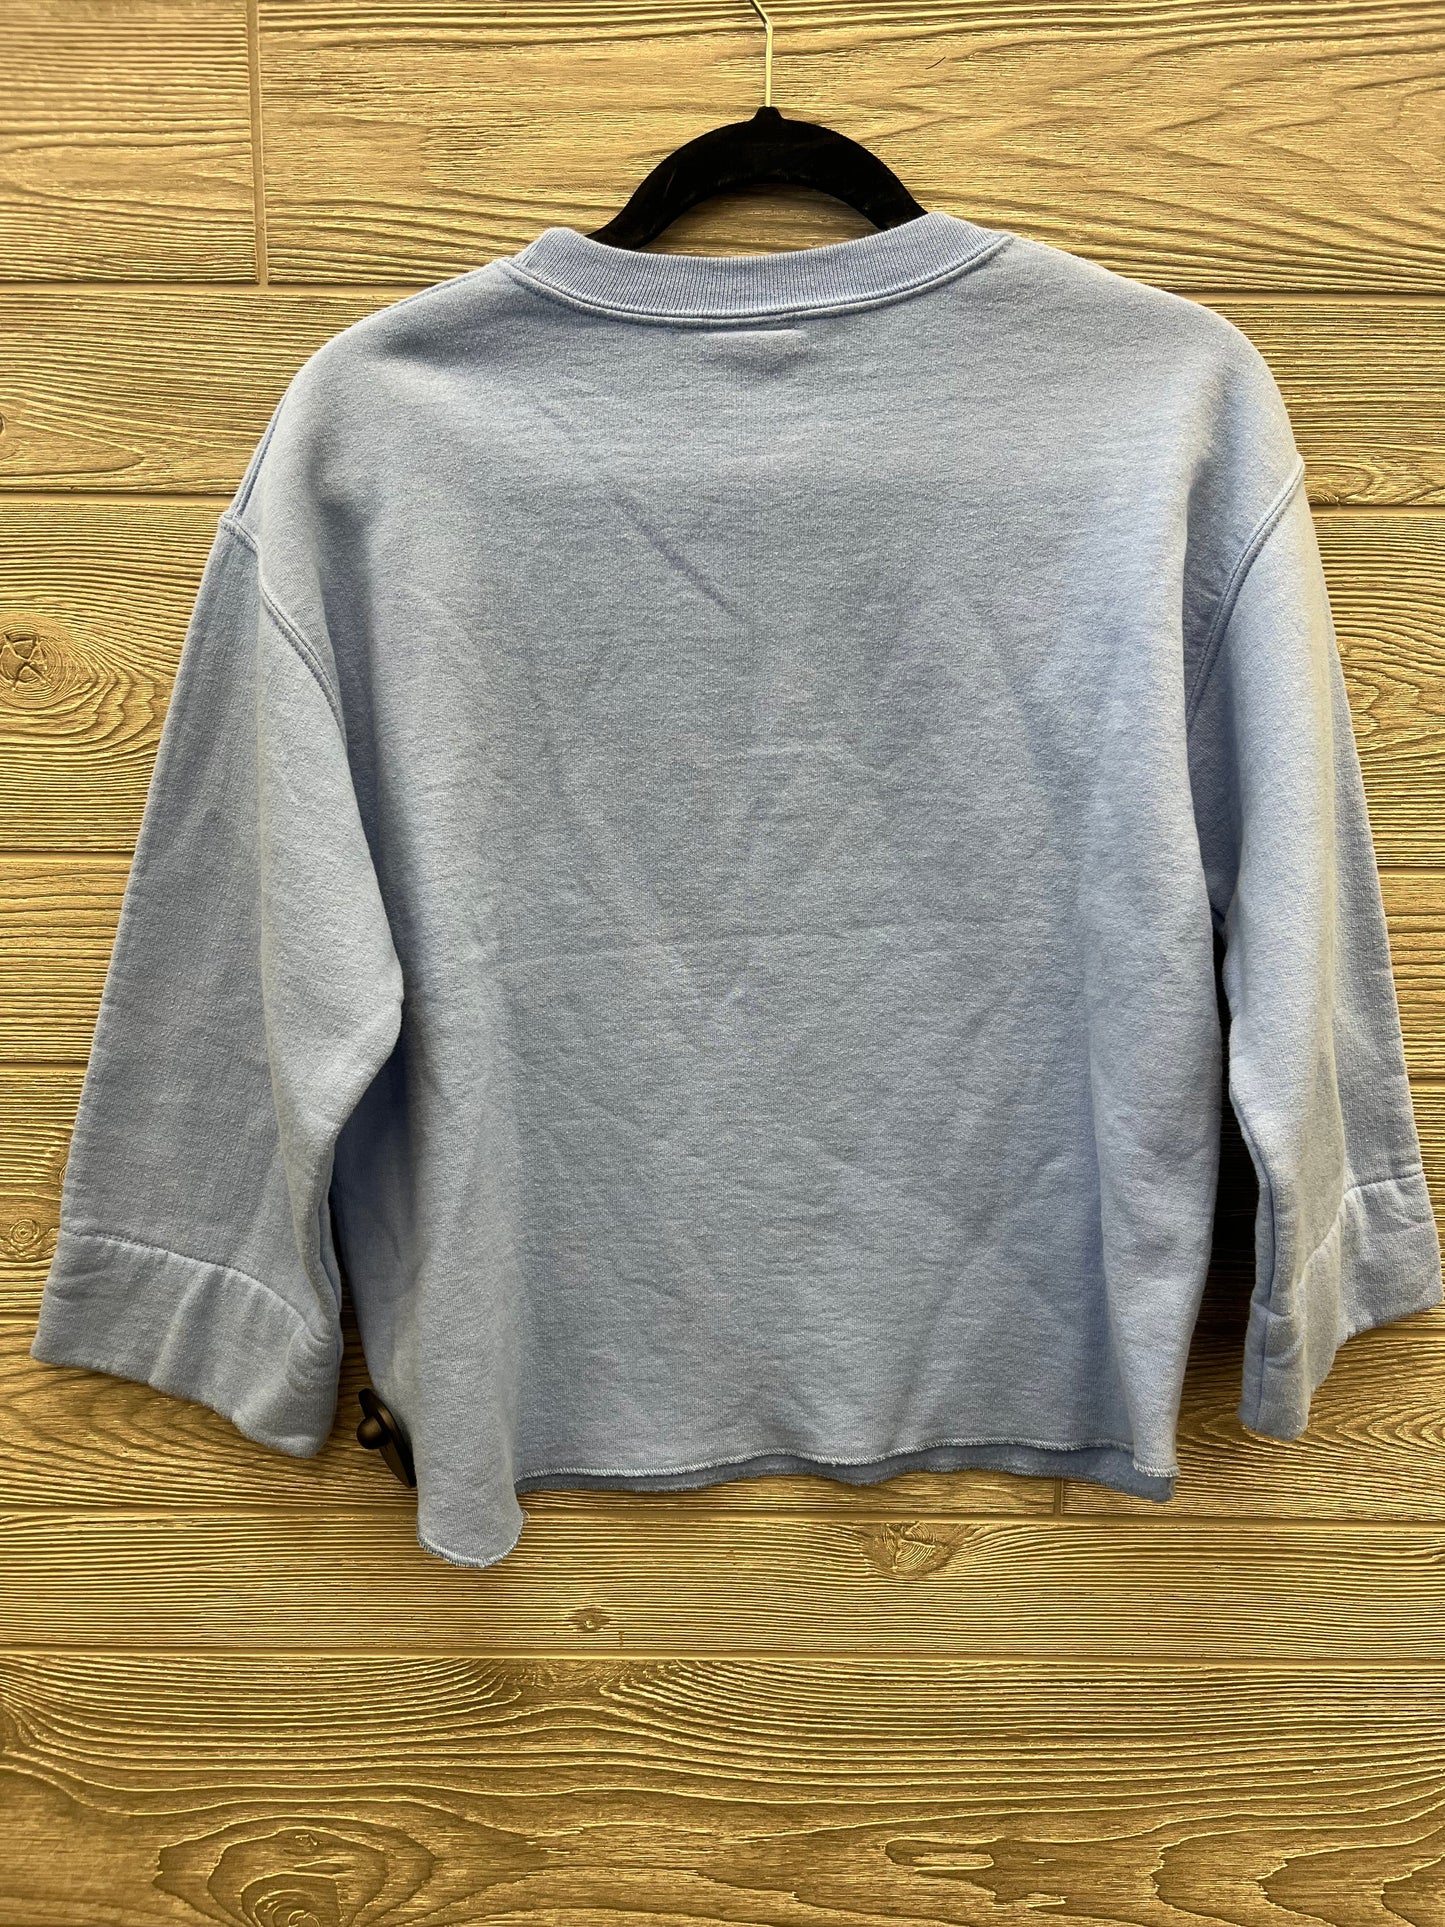 Blue Sweatshirt Crewneck Clothes Mentor, Size S